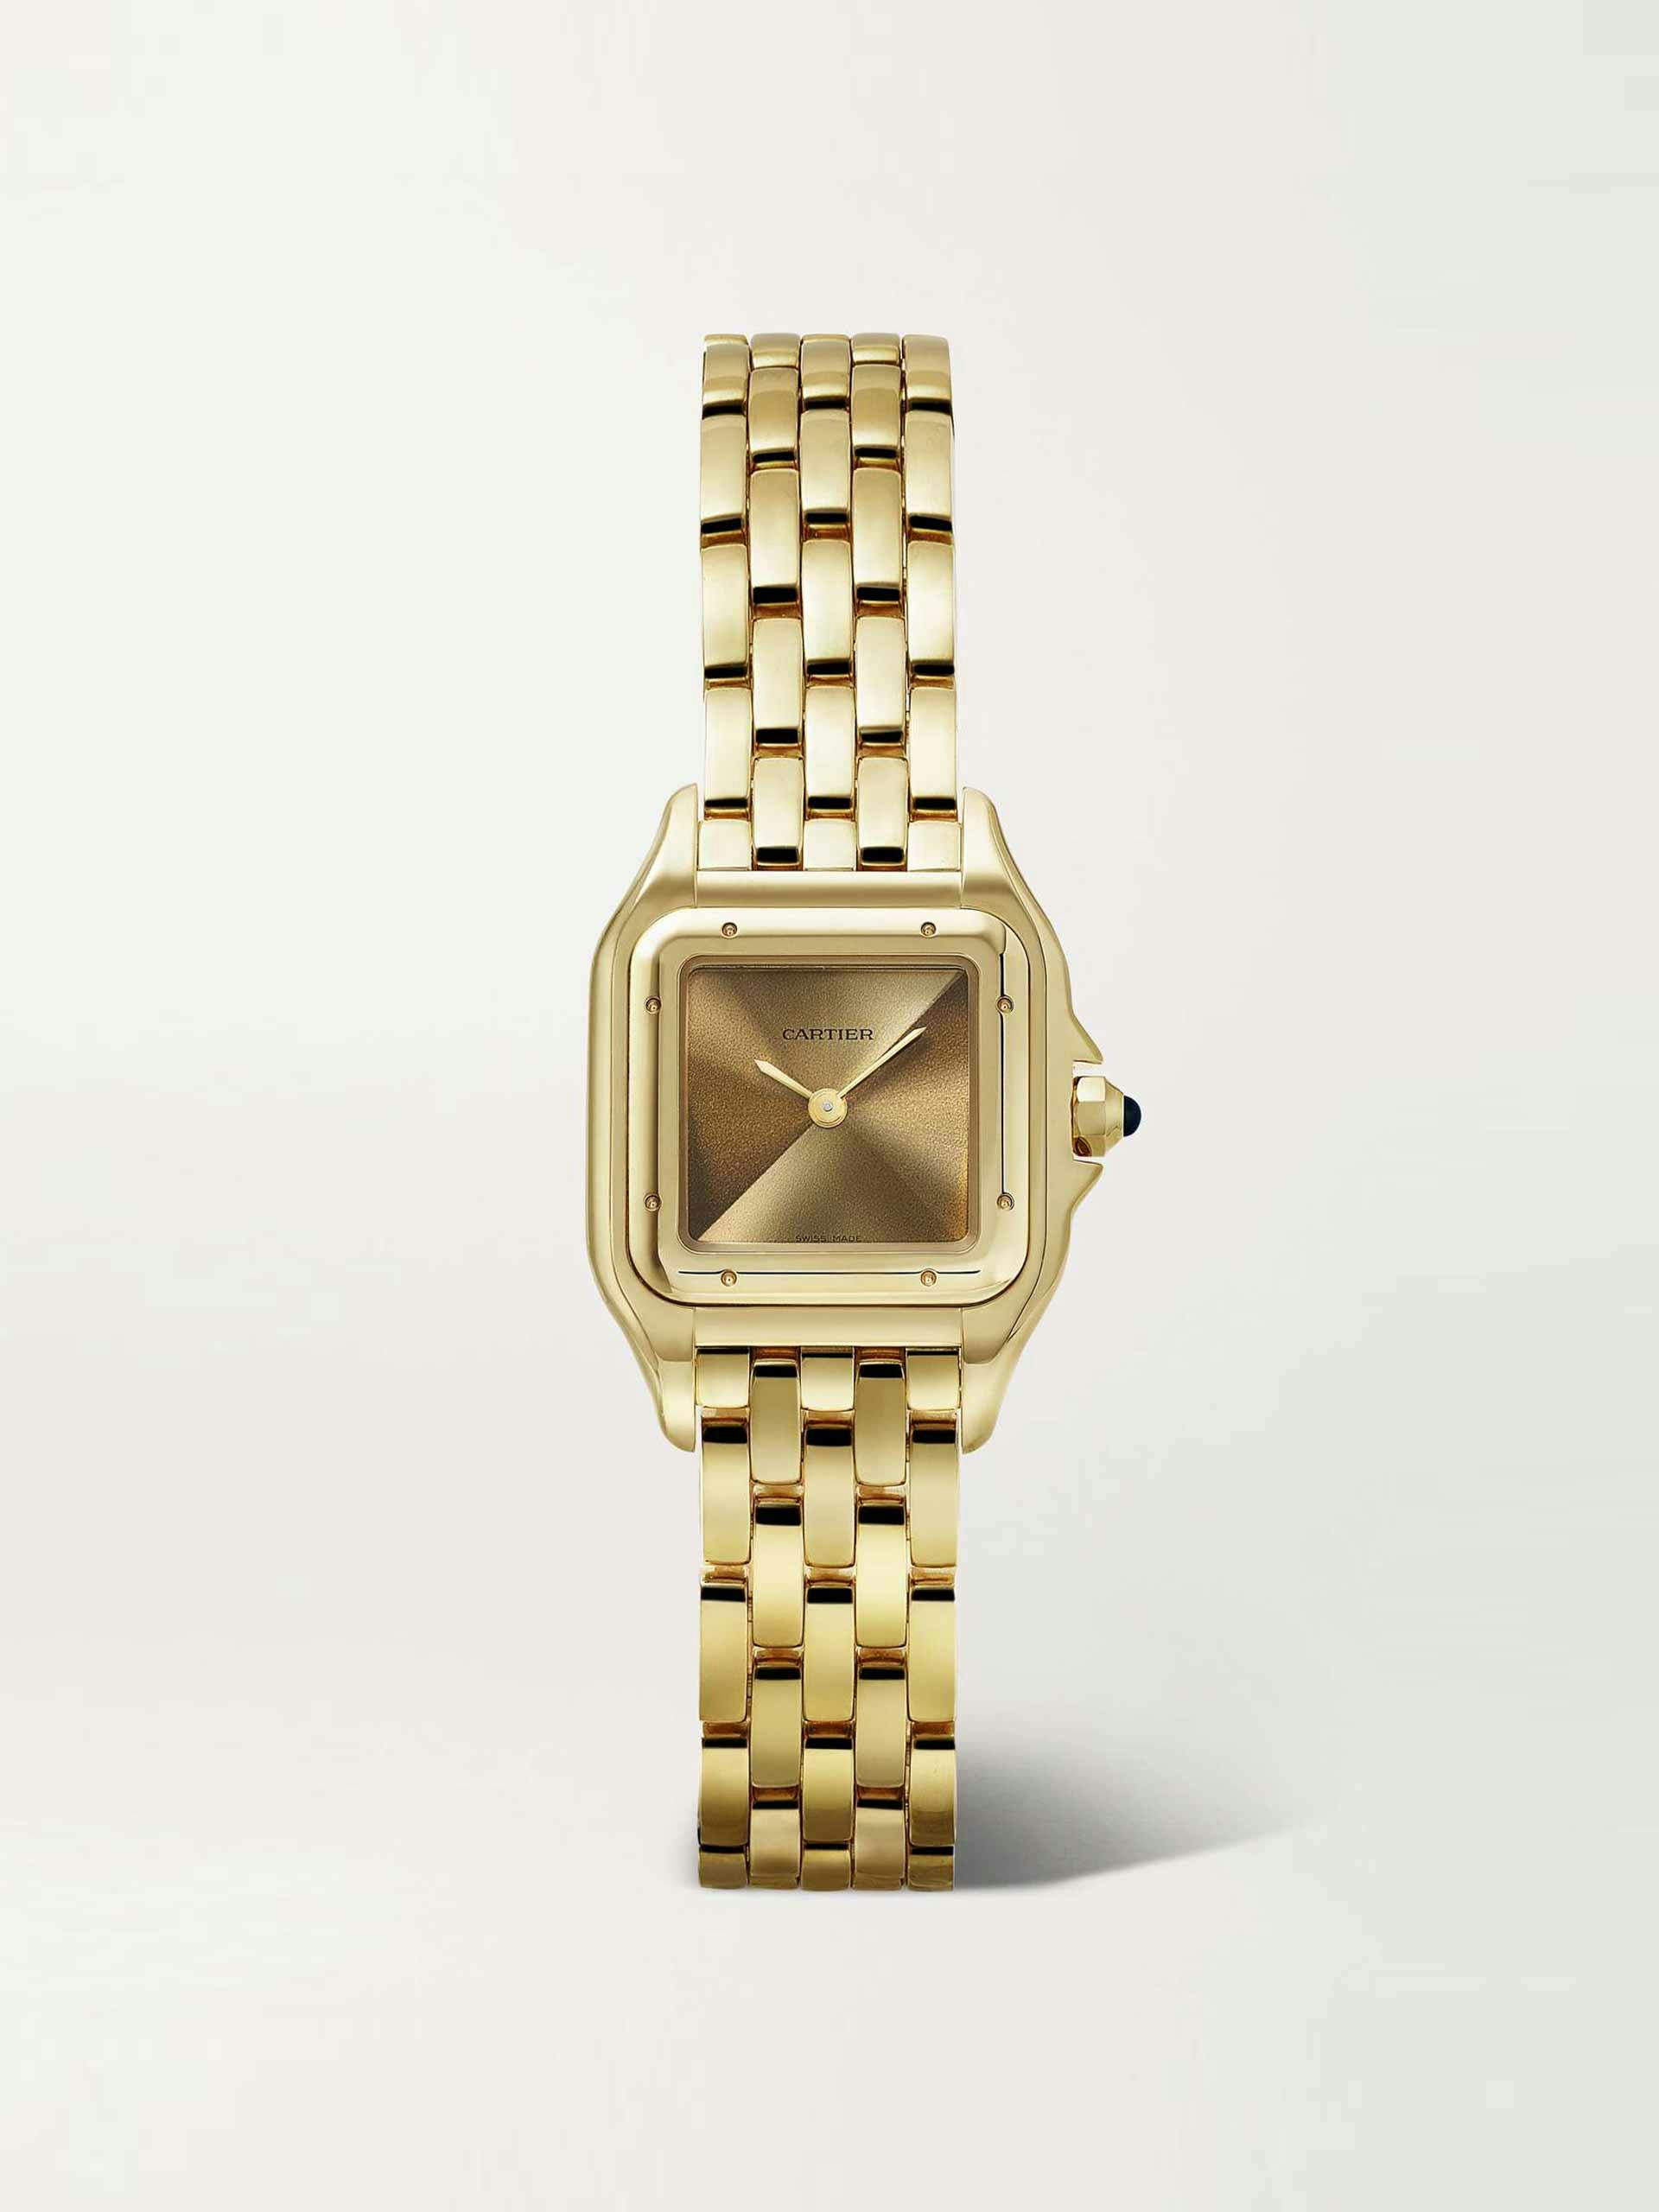 Panthère de Cartier gold watch